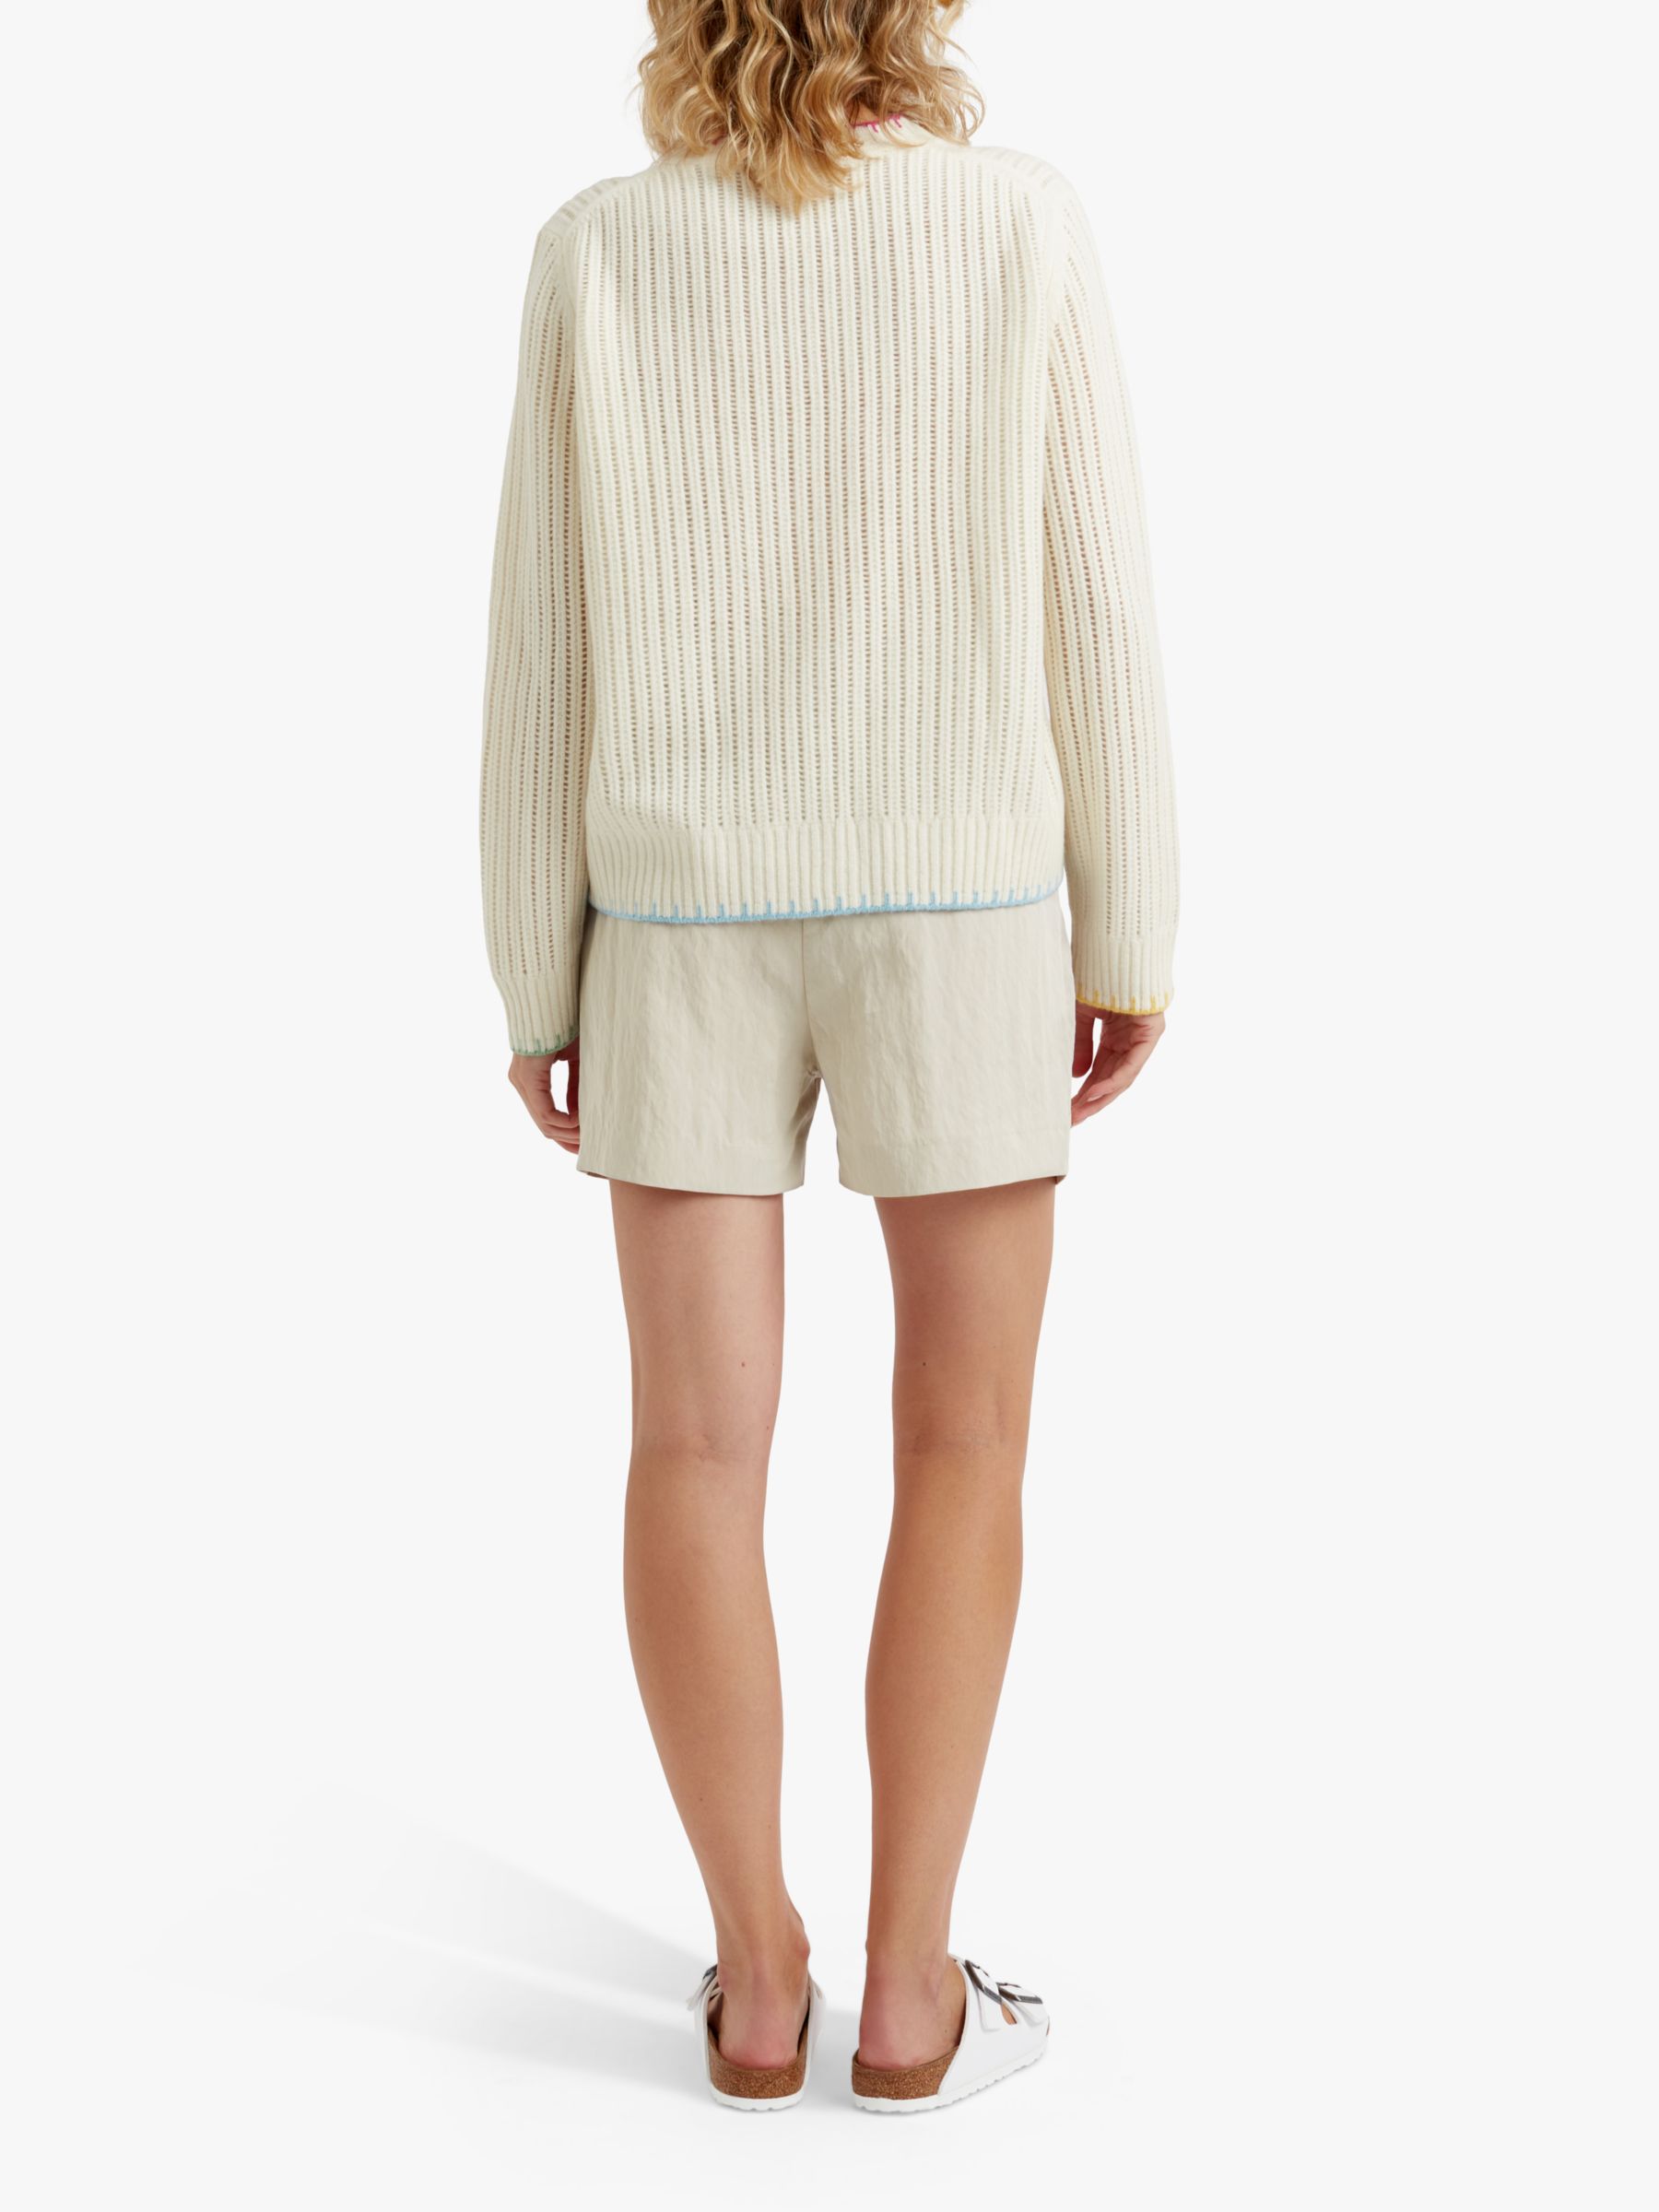 Chinti & Parker Cashmere Blend Summer Stitch Sweater, Cream, XL